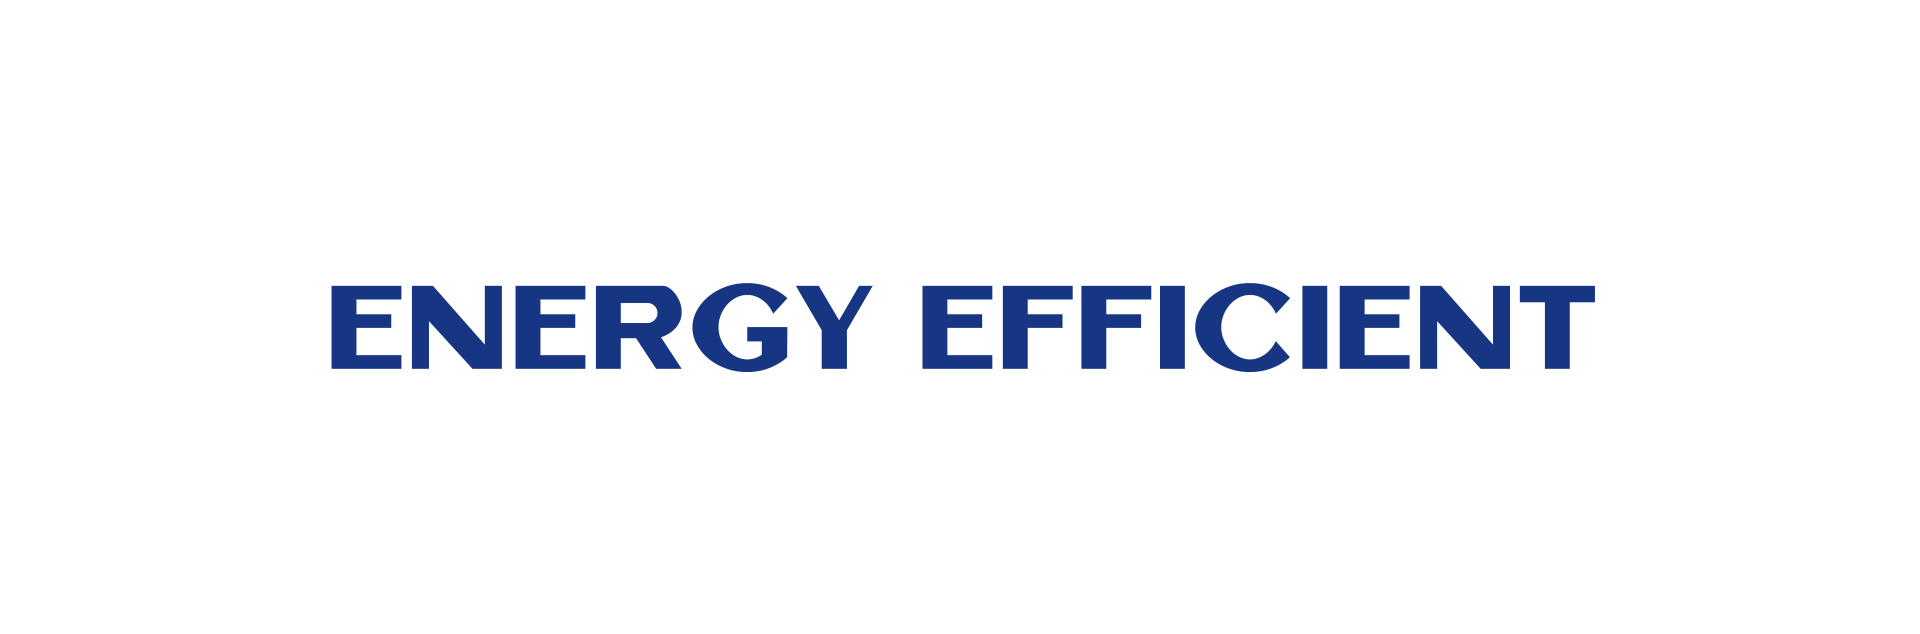 Energy Efficient Text